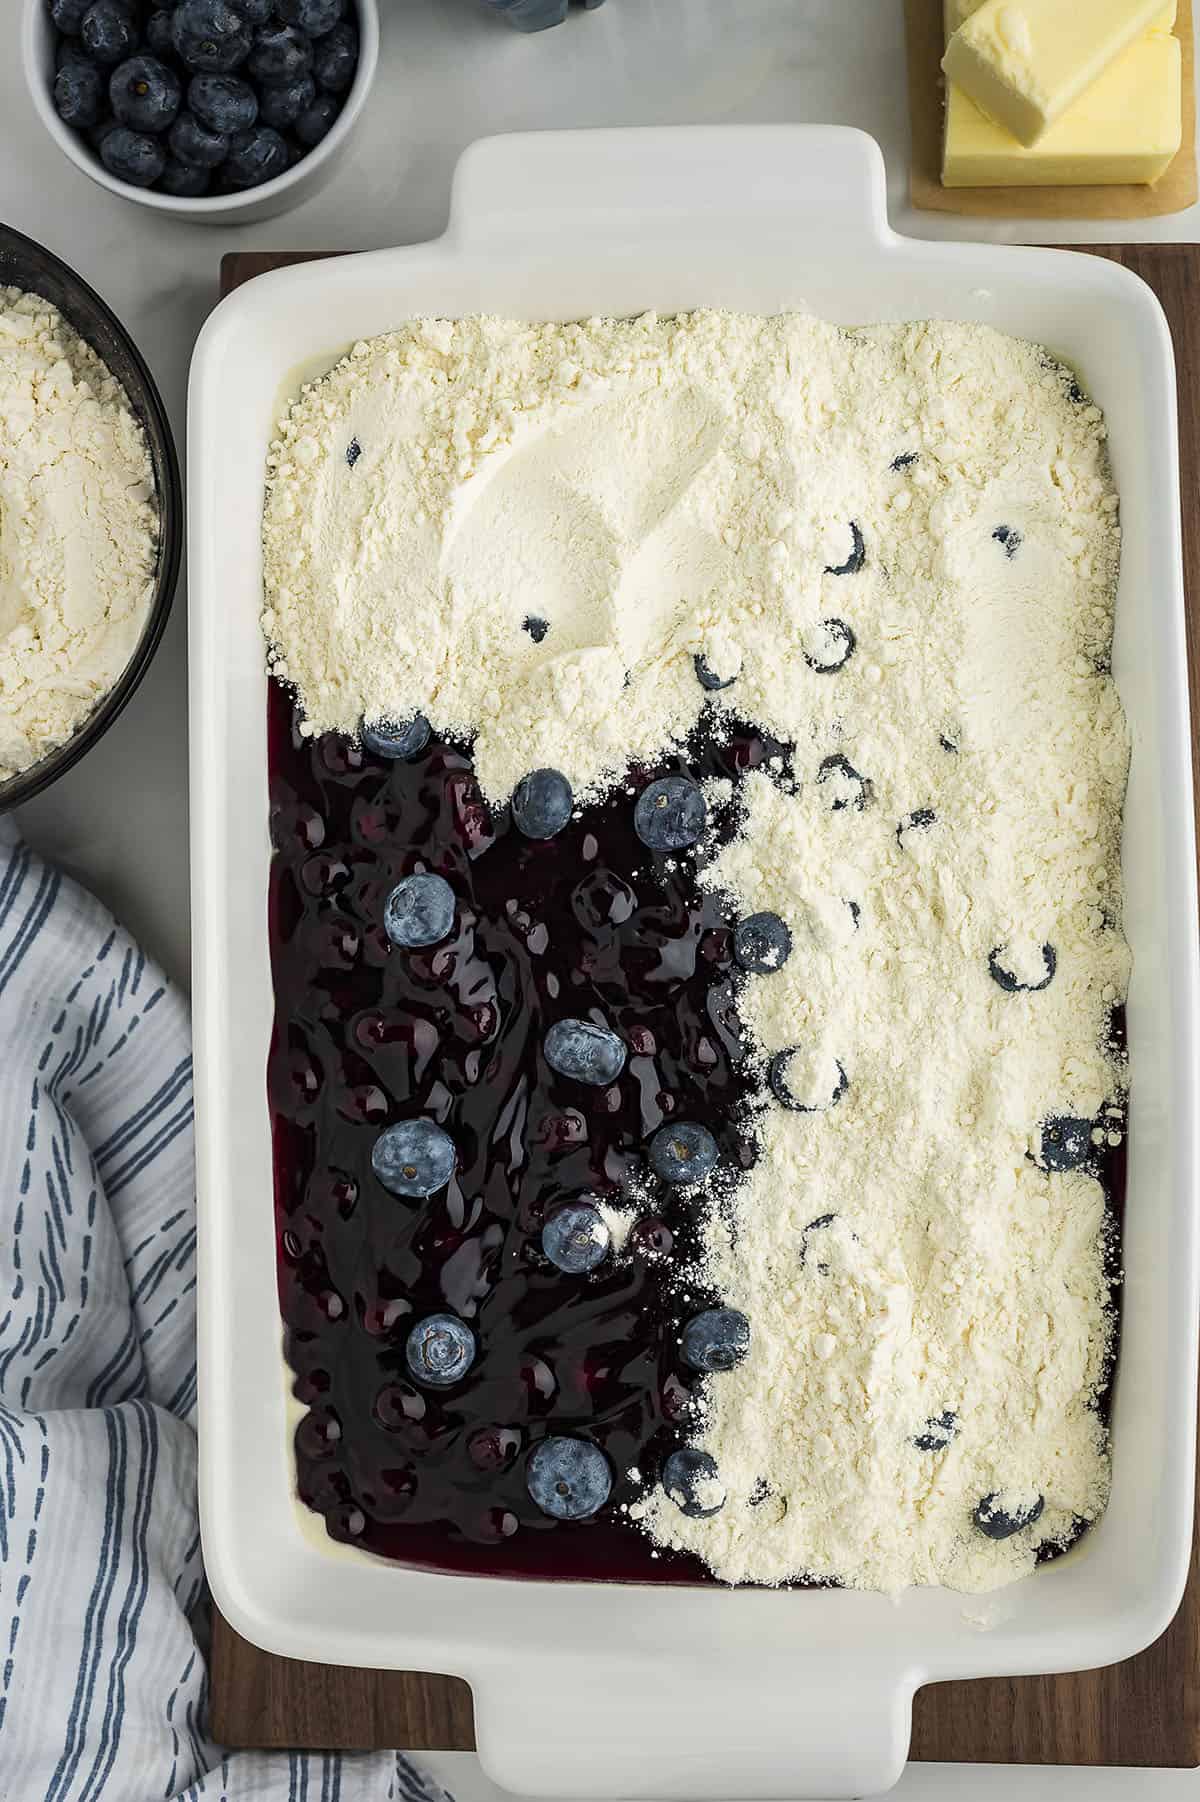 Cake mix sprinkled over half of a blueberry dump cake.